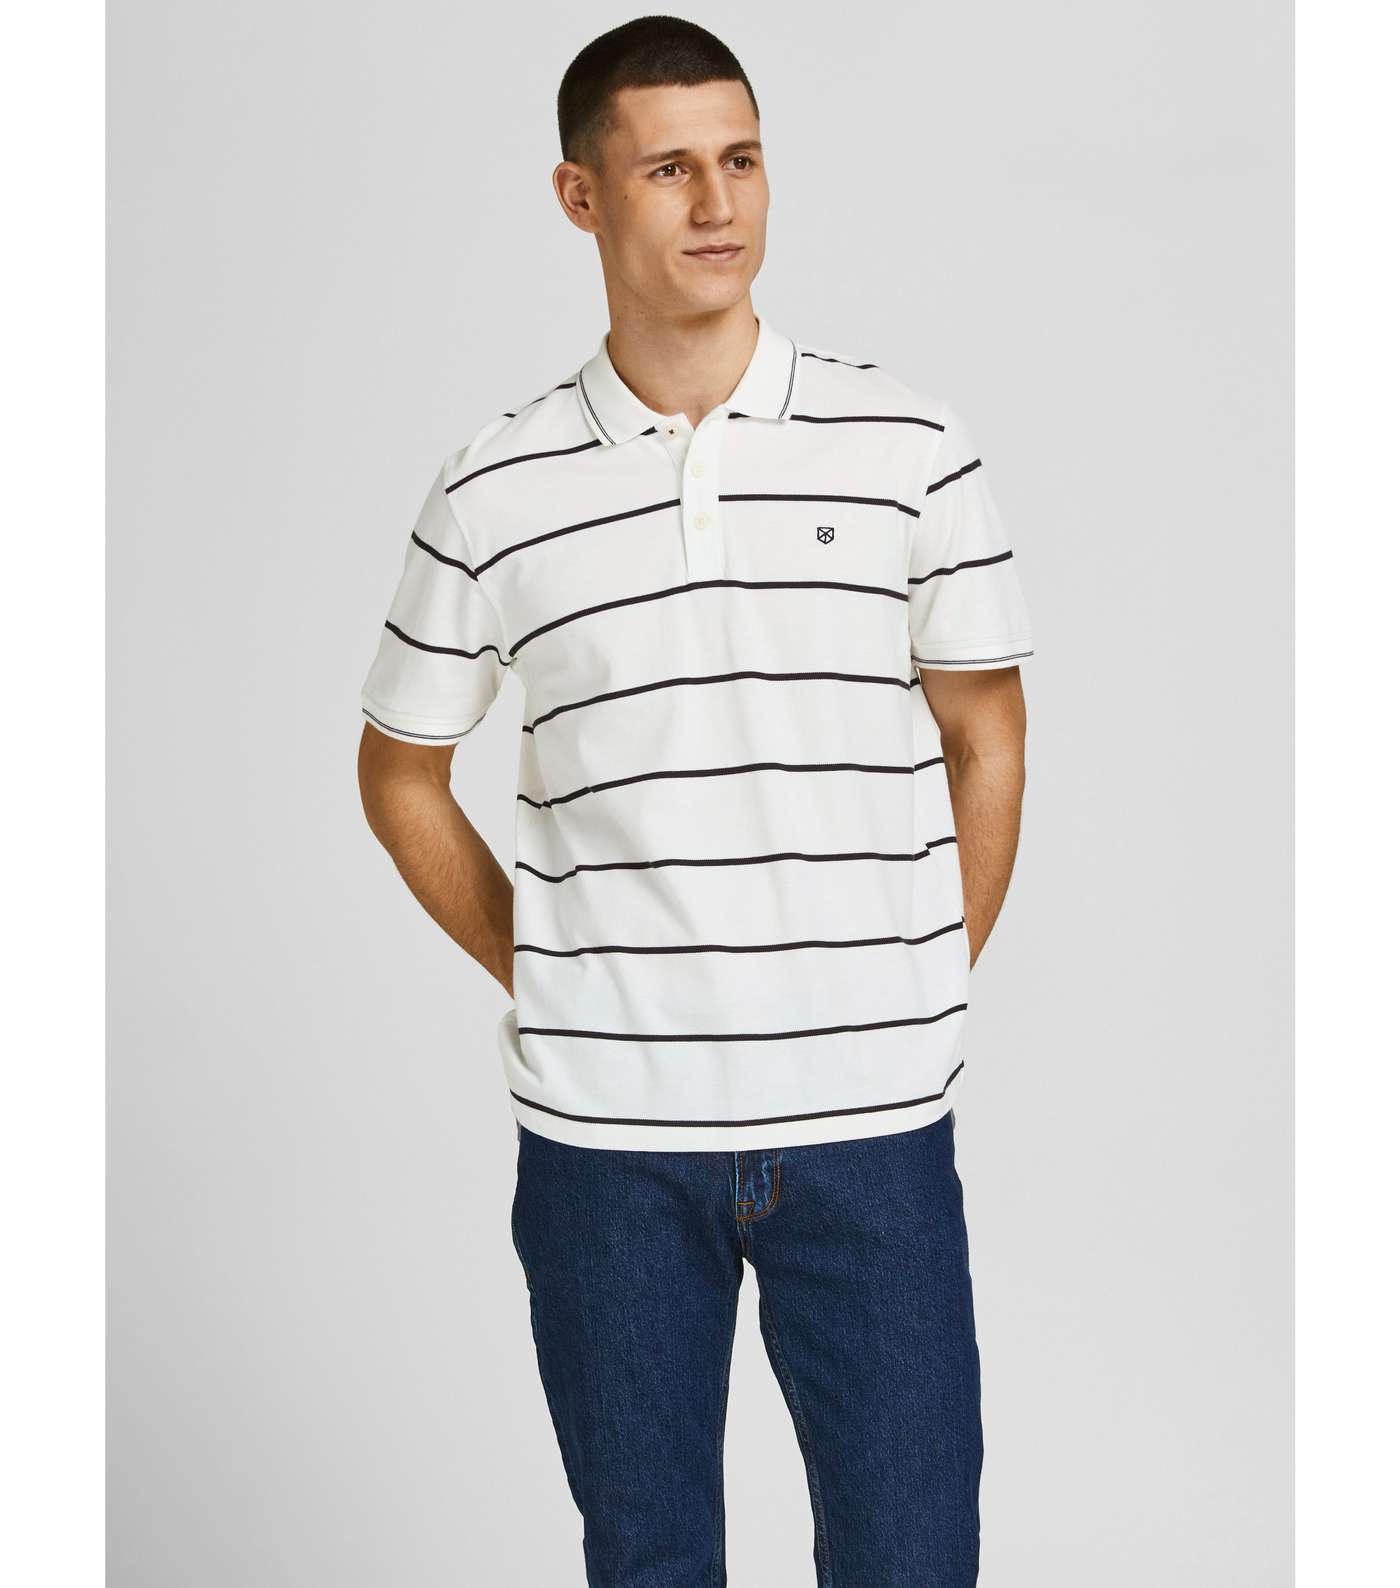 Jack & Jones White Stripe Polo Shirt